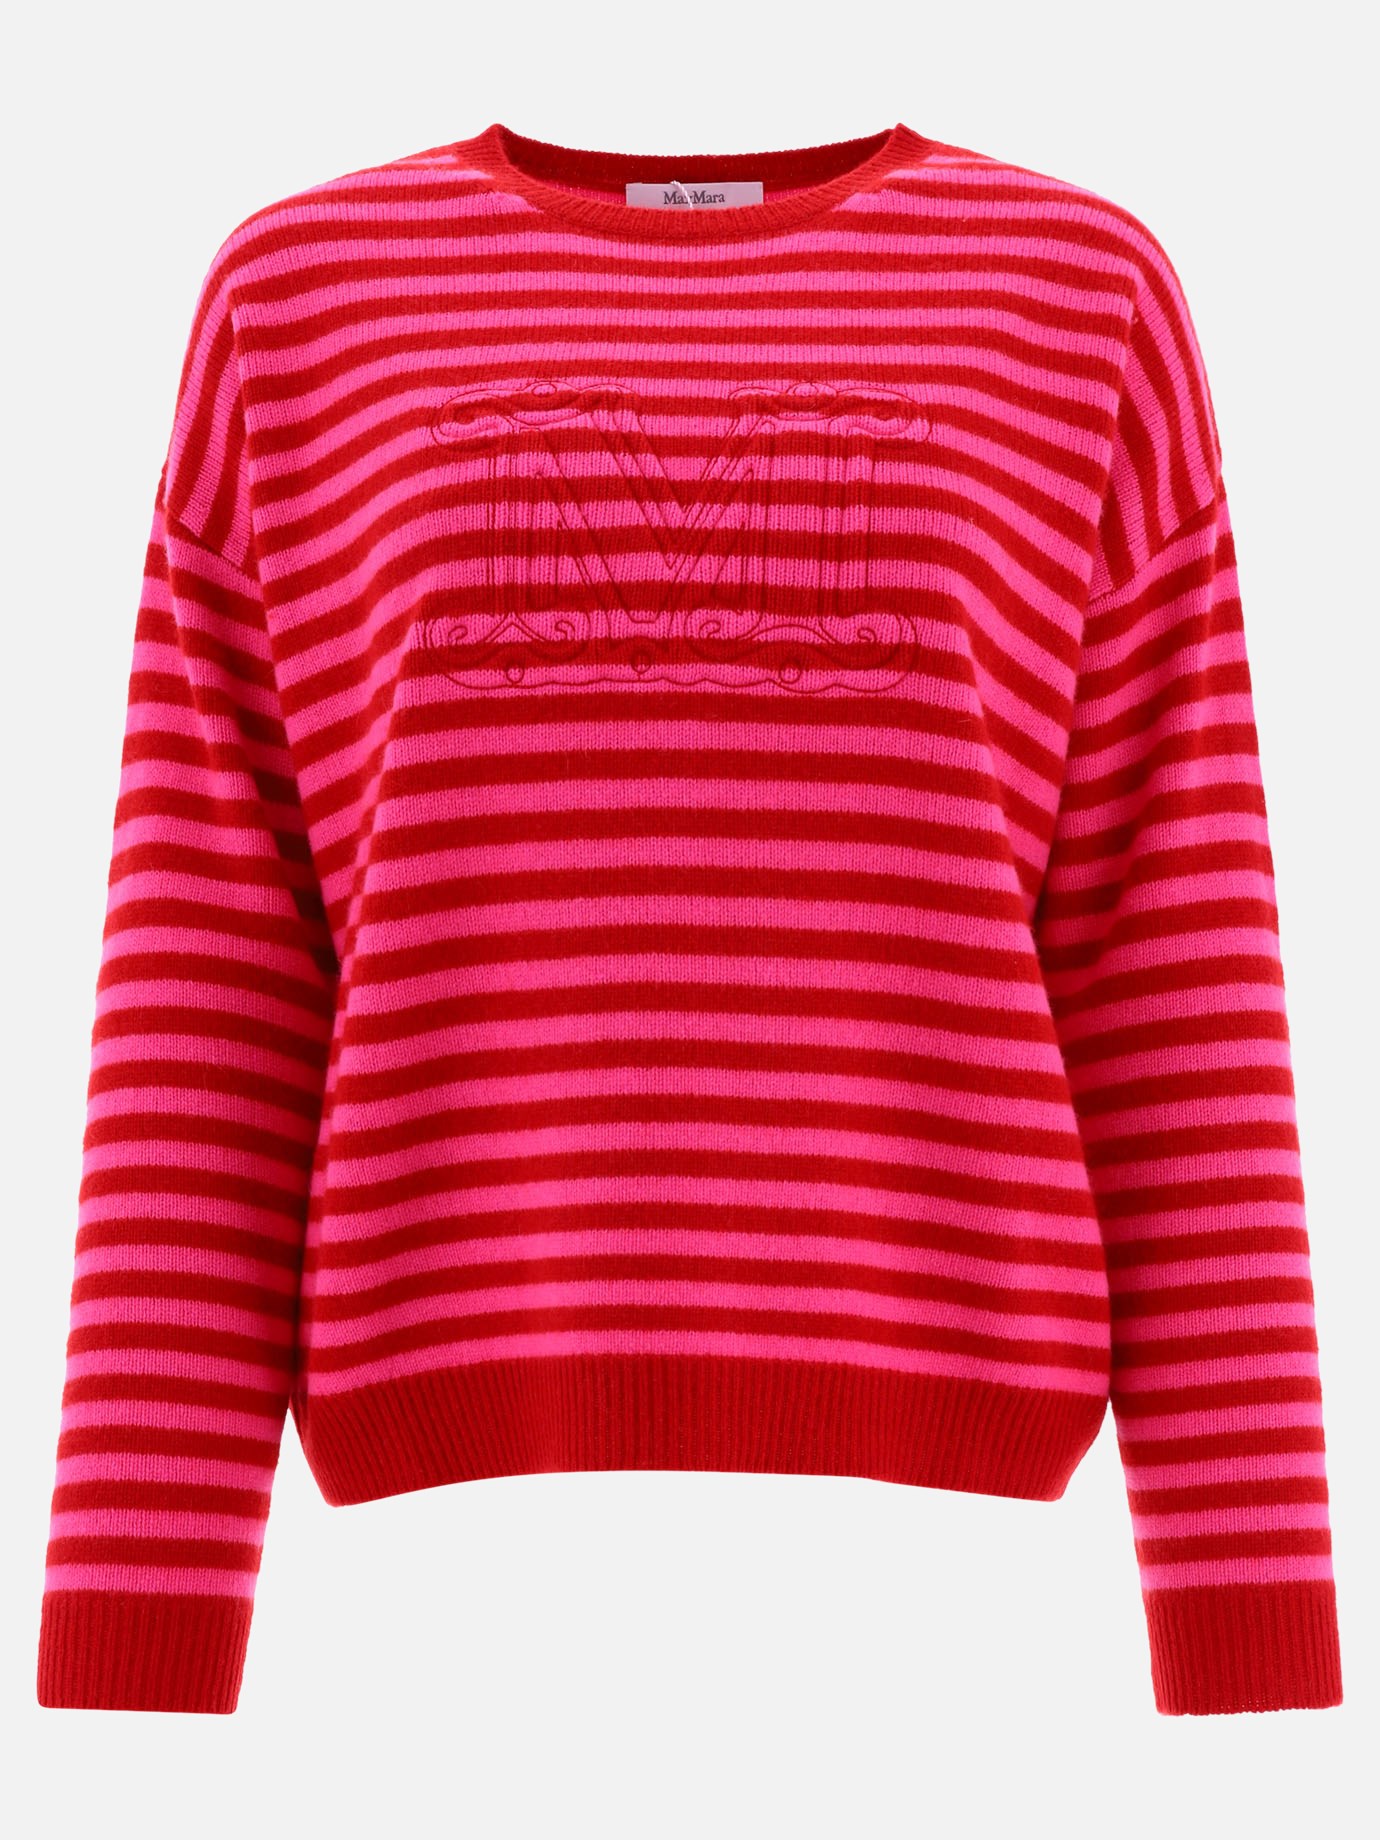  Aster  striped sweaterby Max Mara - 1